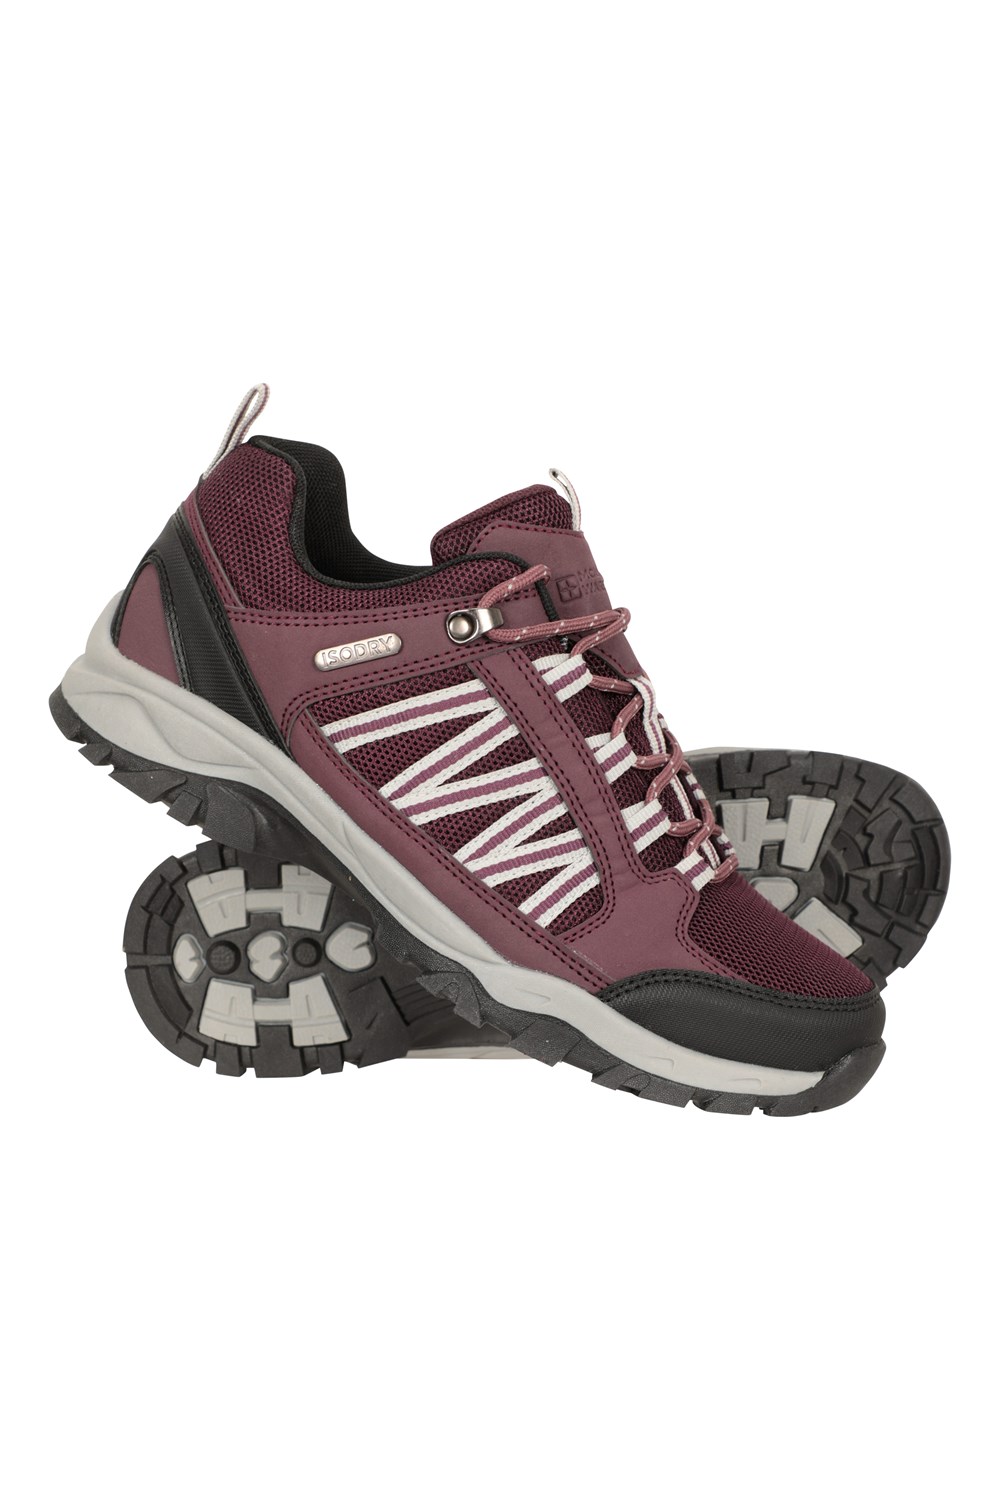 Mountain Warehouse Path Women's Walking Shoes Waterproof Ladies ...